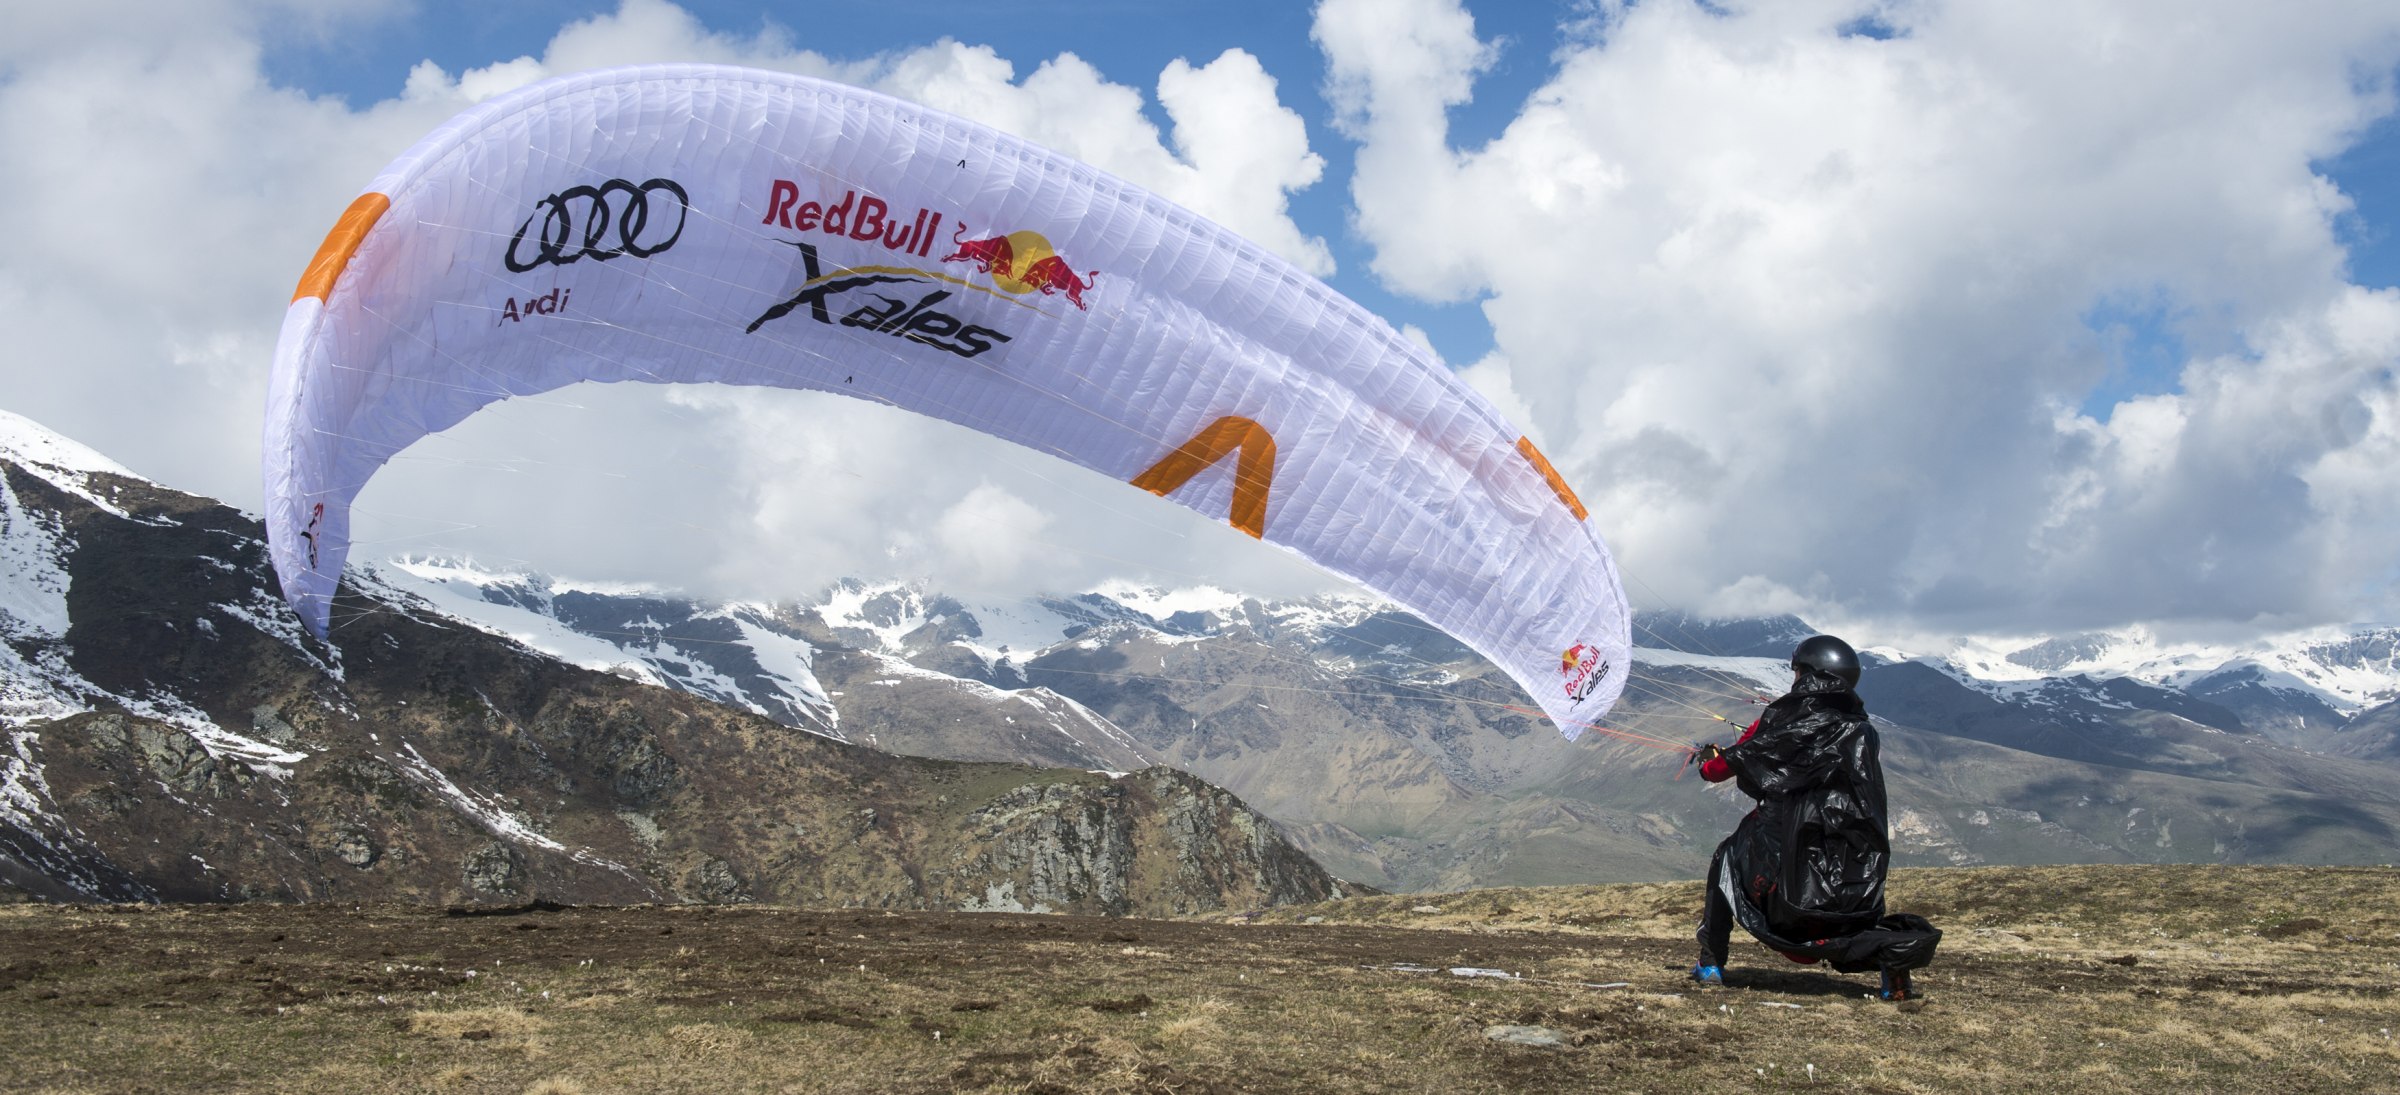 Red Bull X Alps 8 Athleten Schafften Monaco Samerberger Nachrichten